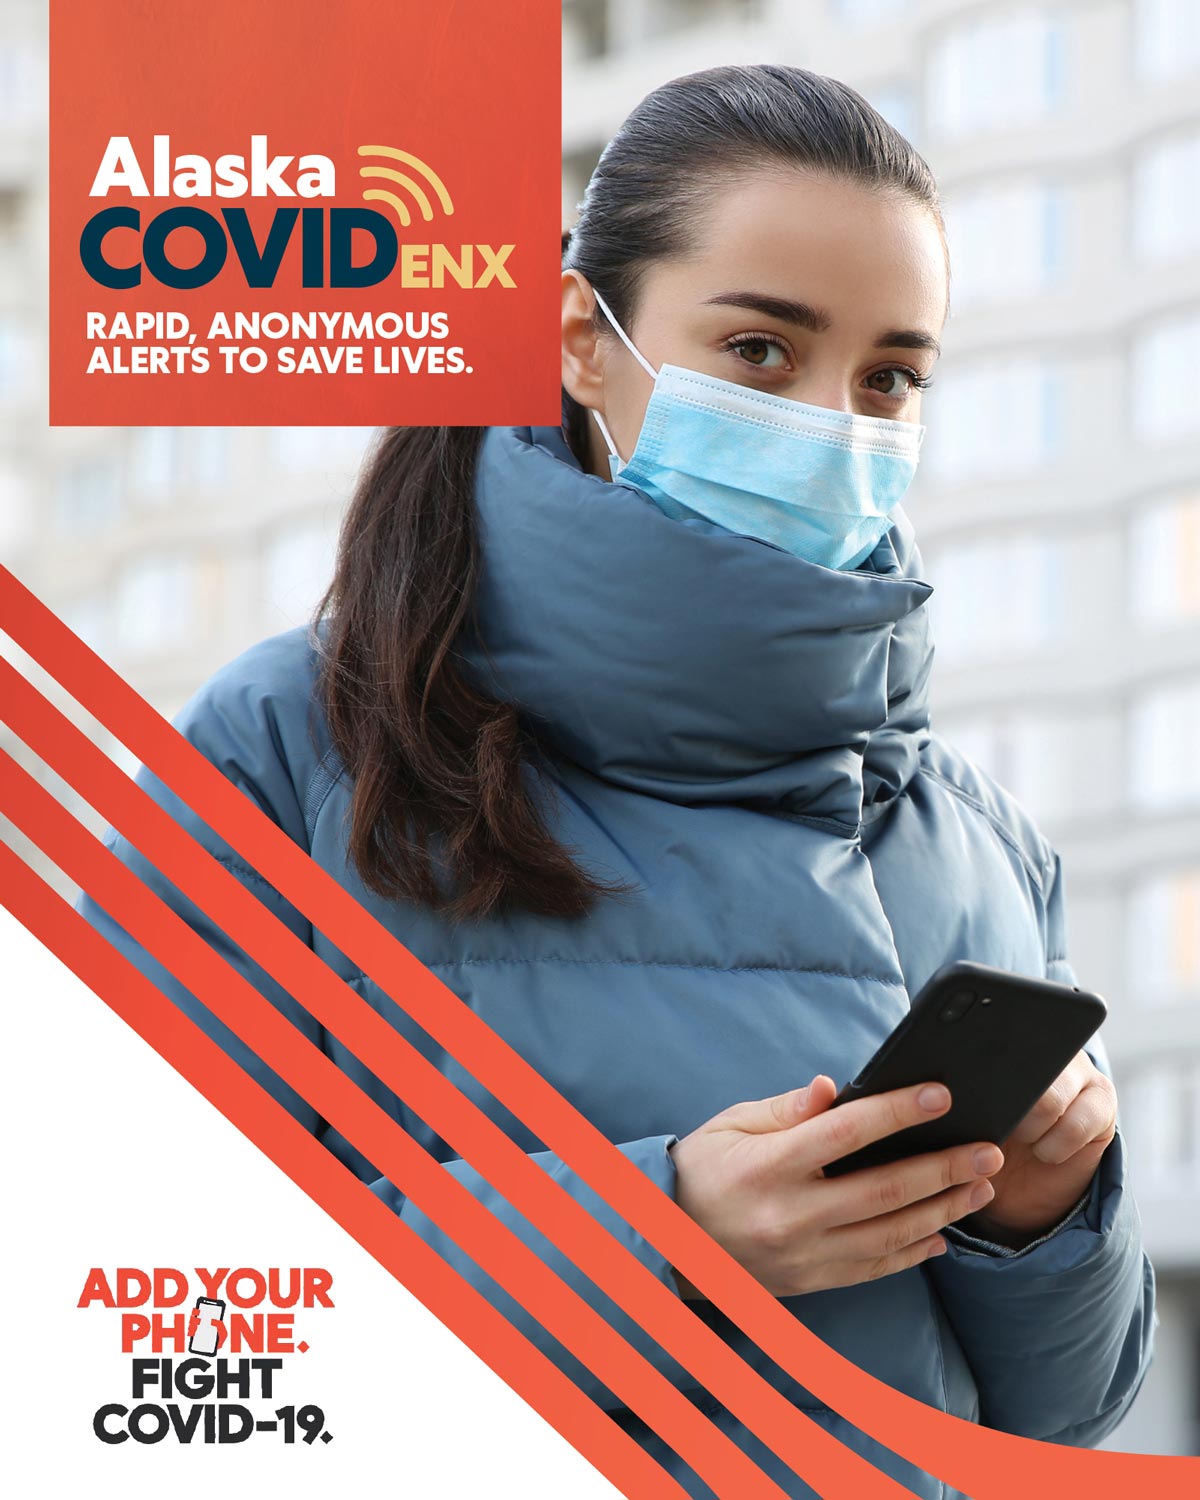 Alaska COVID ENX: Rapid, anonymous alerts to save lives. Learn more at enx.alaska.edu.